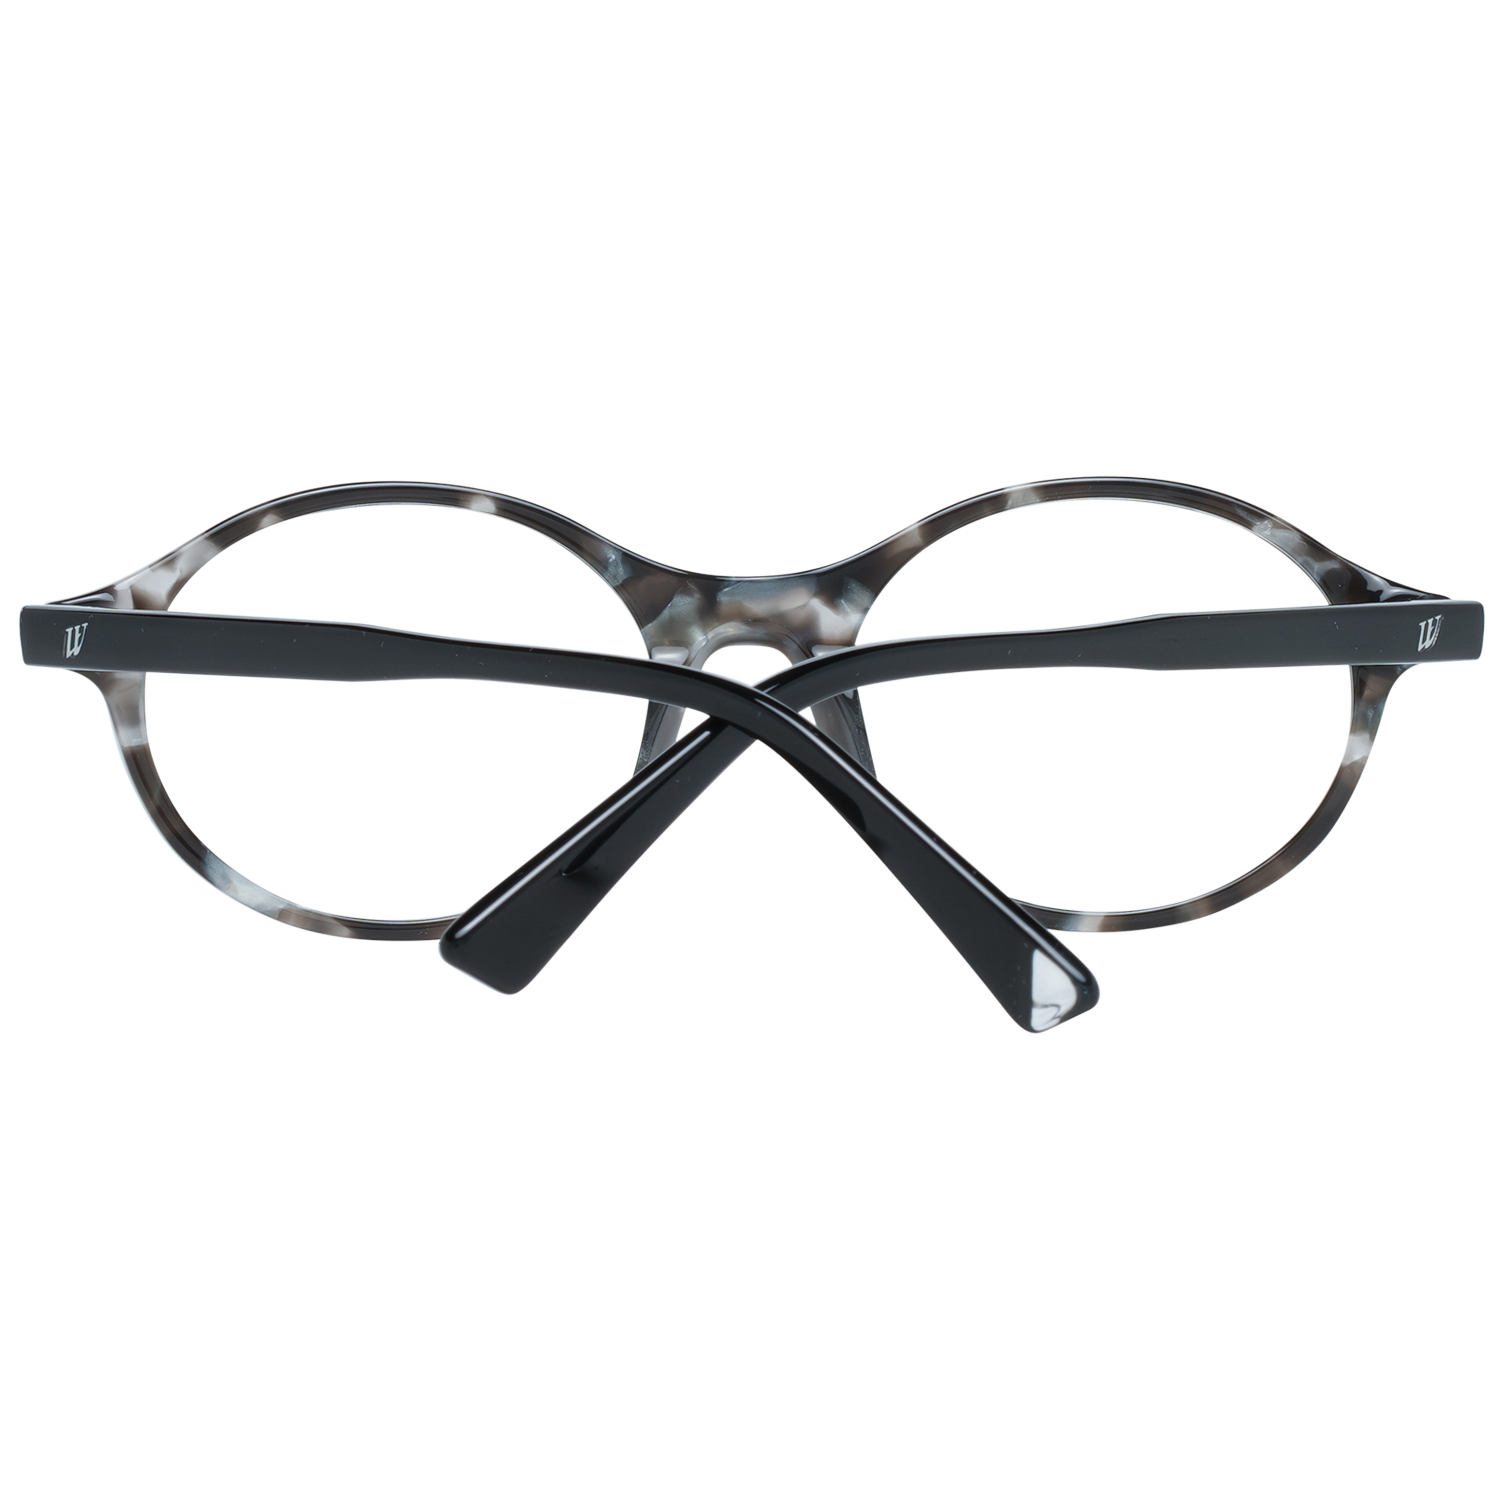 Web Frames Web Prescription Glasses Optical Frame WE5306 005 52 Eyeglasses Eyewear UK USA Australia 